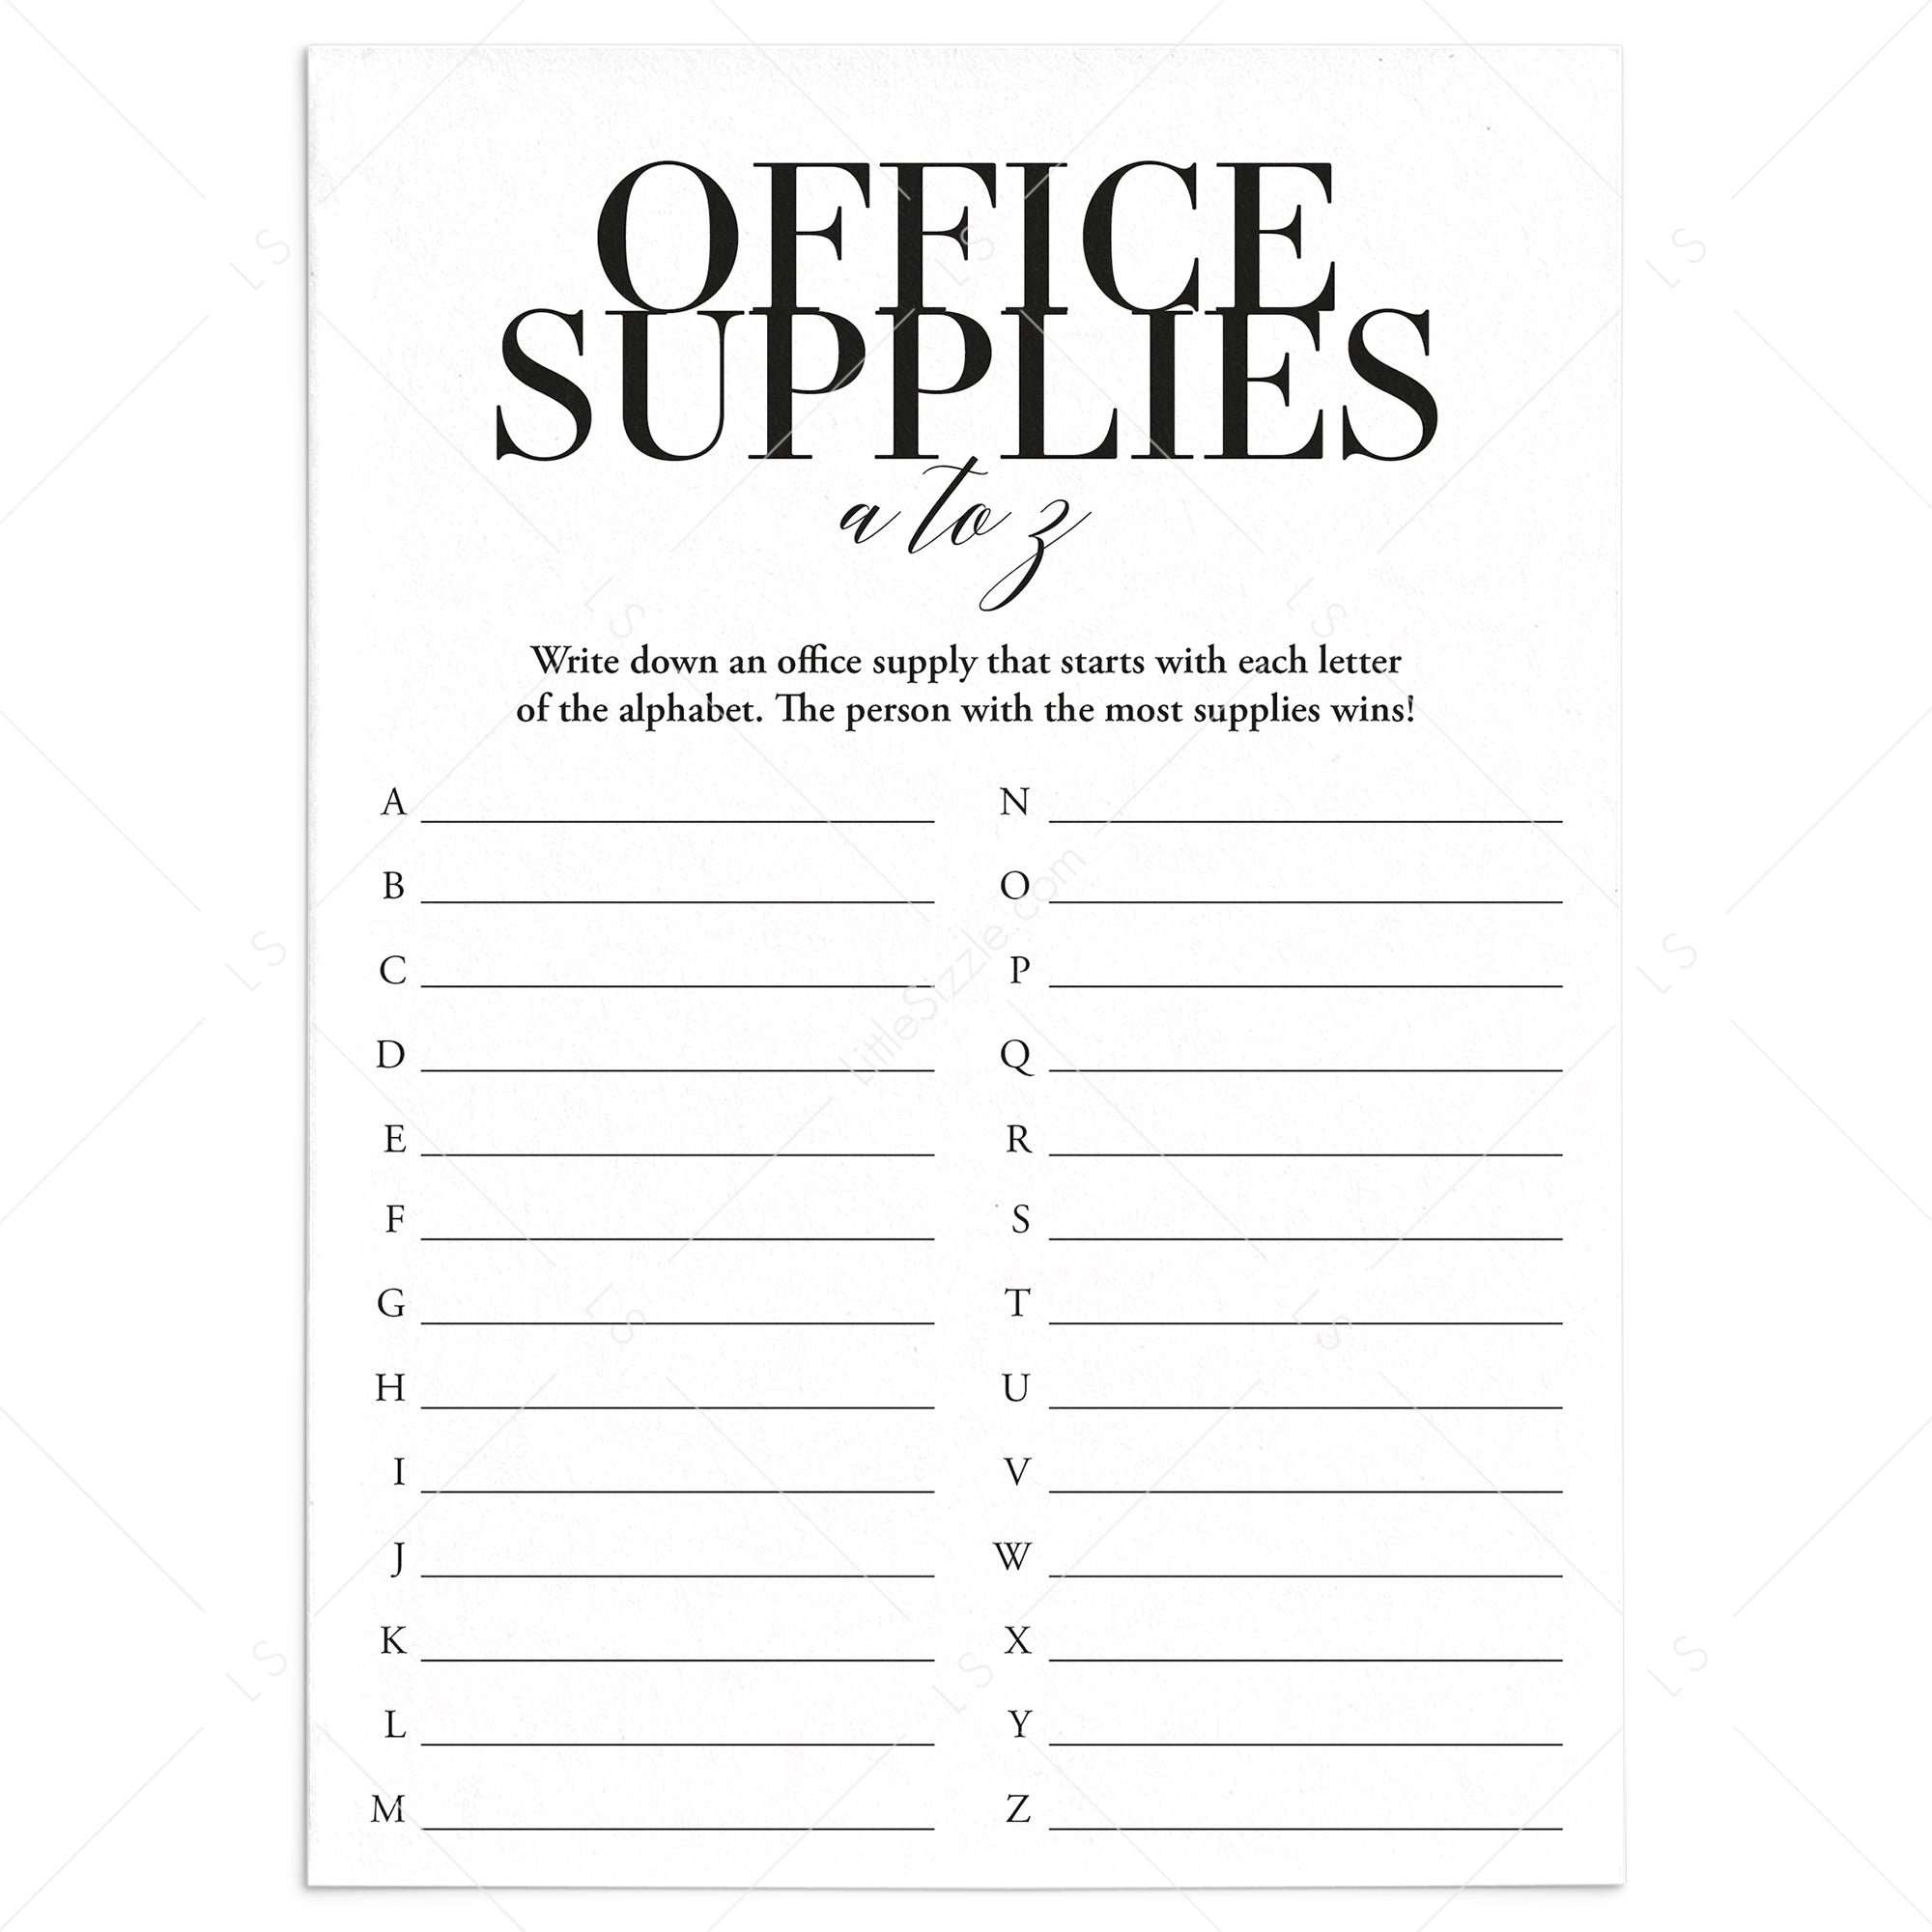 Office supply samples bundle